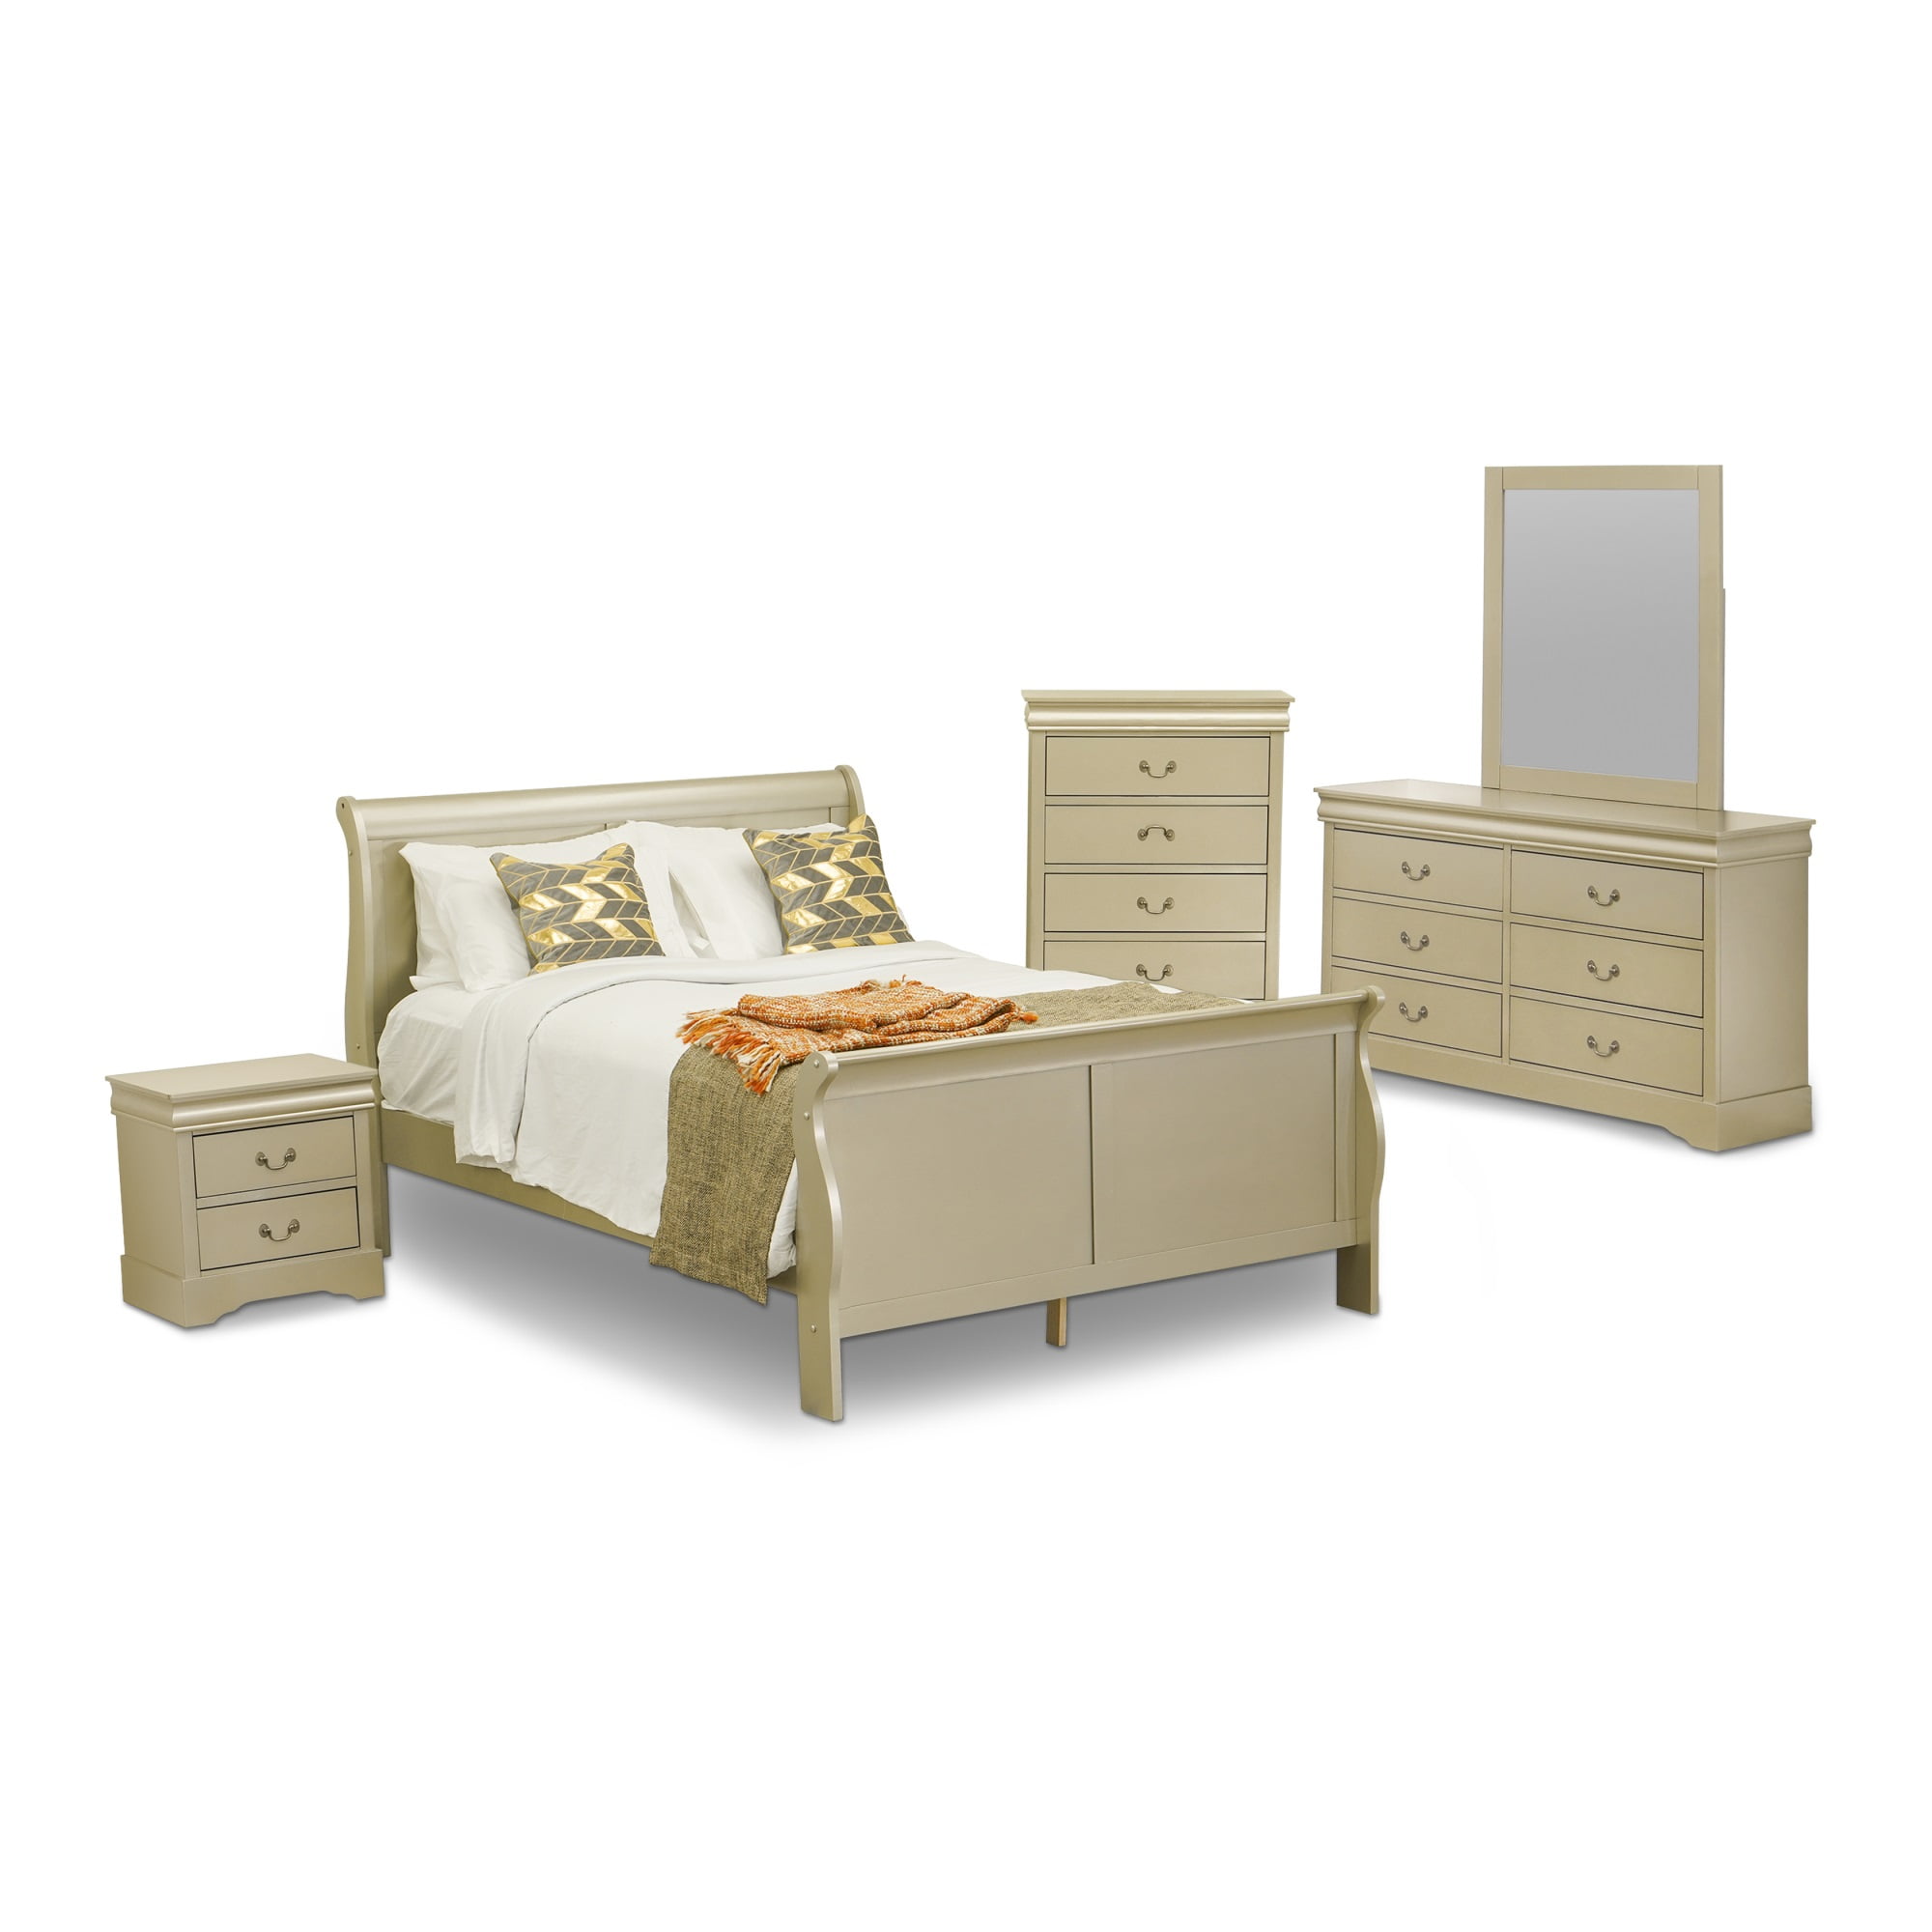 East West Furniture Louis Philippe 3 Piece Queen Size Bedroom Set